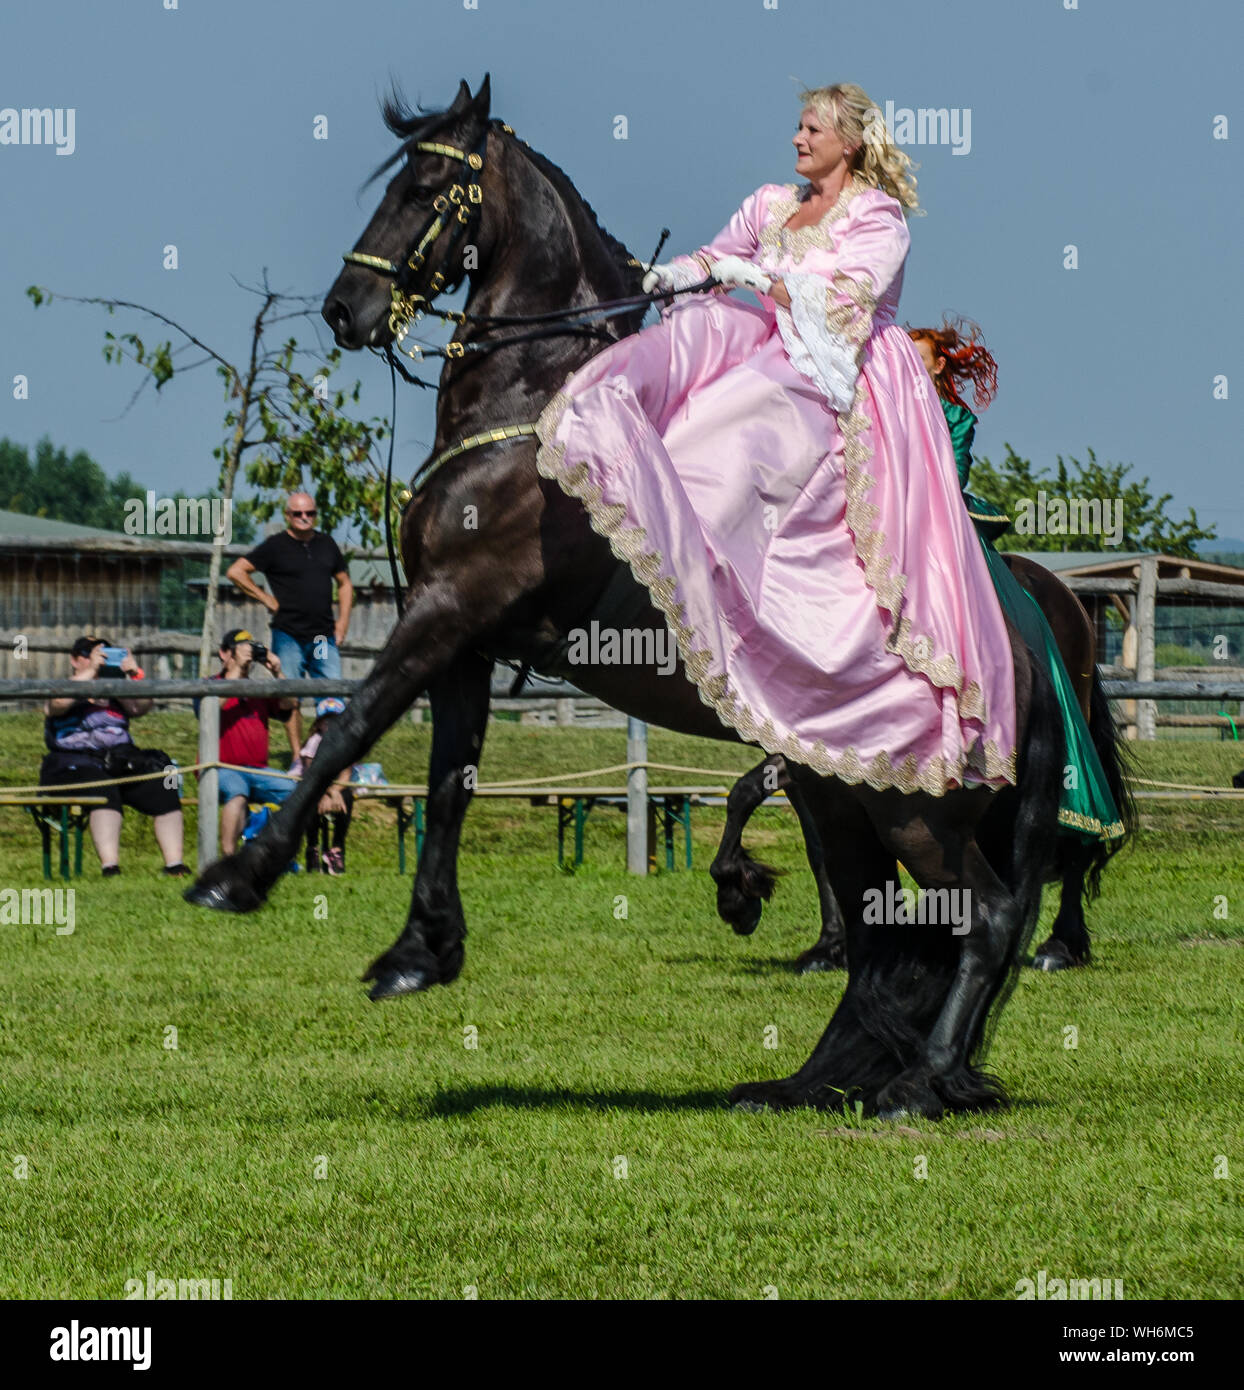 Schloss Hof Großes Pferdefest 2019 Great Equestrian Show at Schloss Hof Castle with two women riding on a side saddle Stock Photo